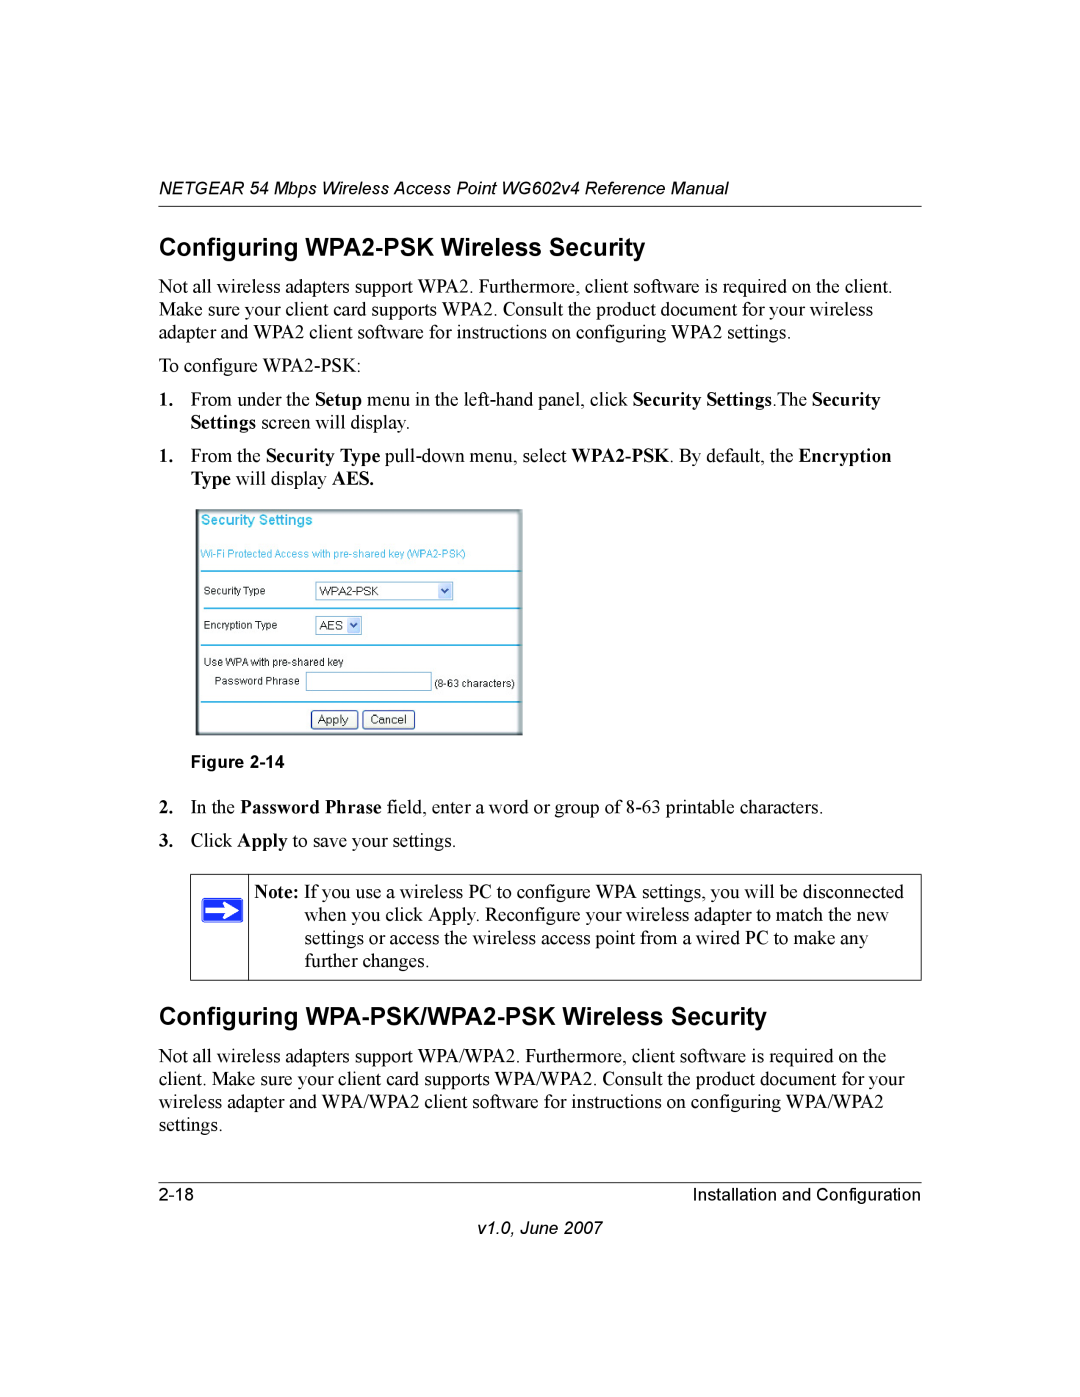 NETGEAR WG602V4 manual Configuring WPA2-PSK Wireless Security, Configuring WPA-PSK/WPA2-PSK Wireless Security 